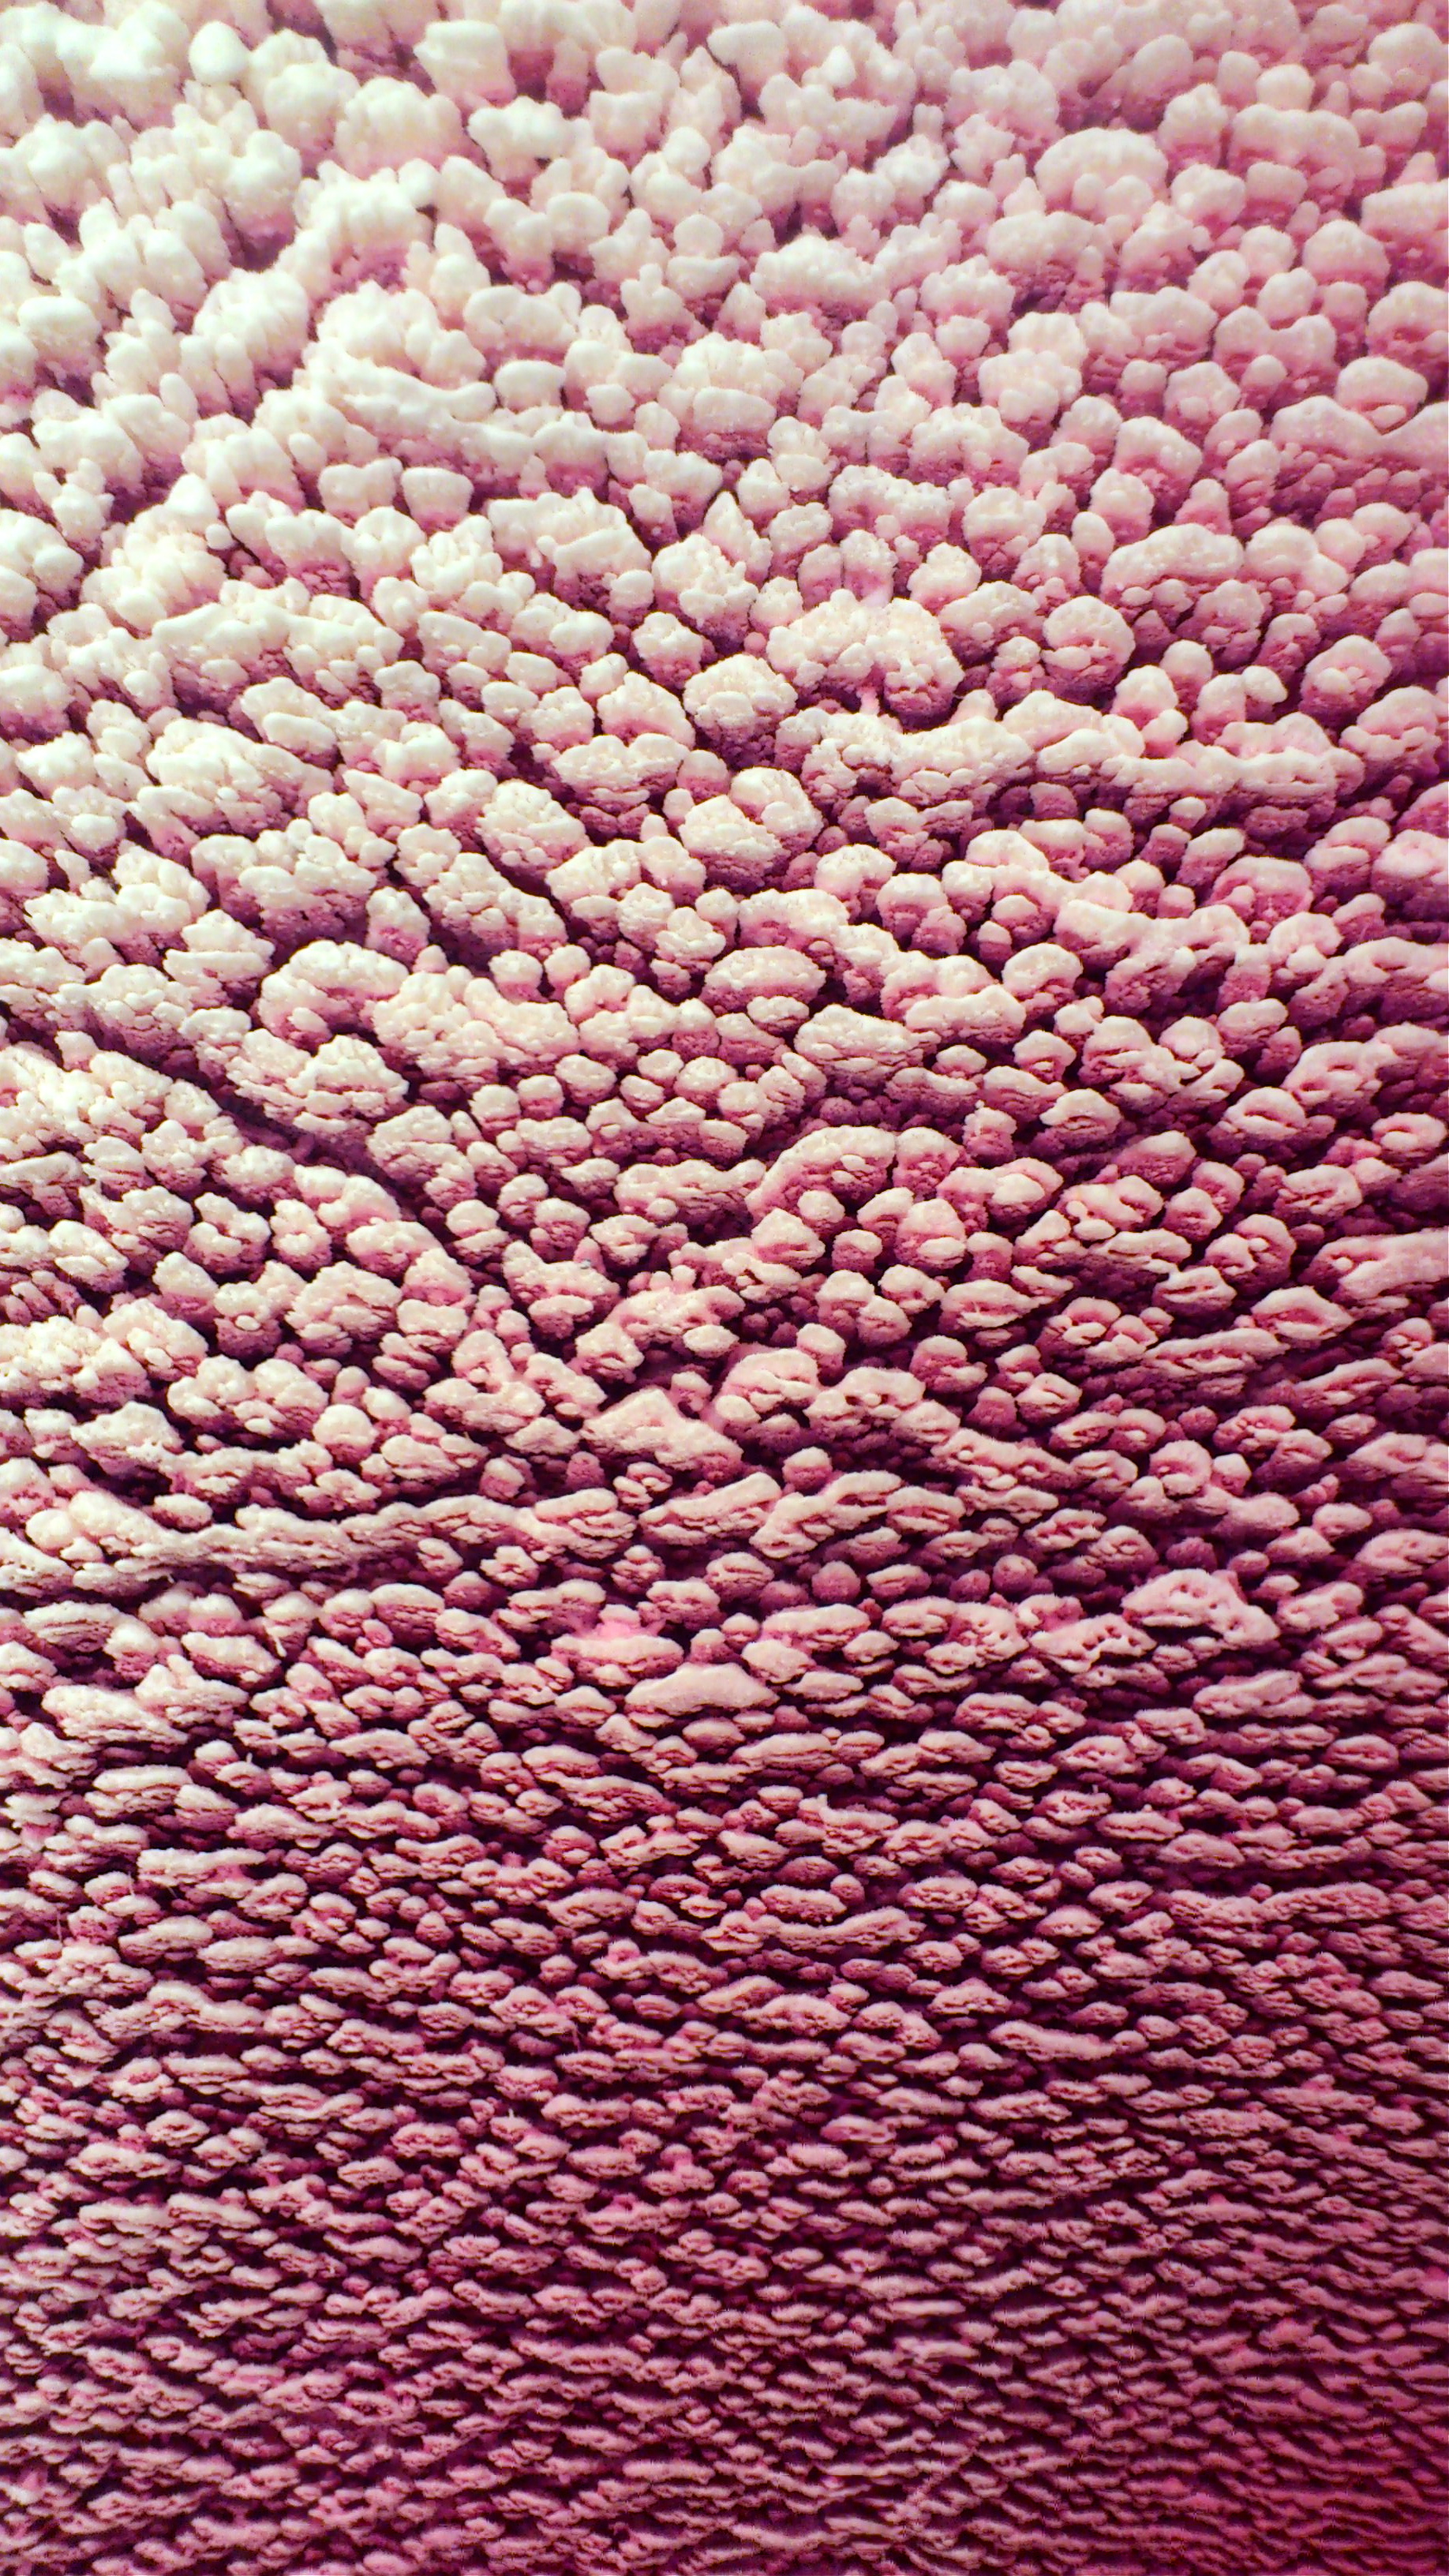  Rowena Boyd   Big Pink Requiem  (detail), 2012  Encaustic and oil on board  180 x 120 cm    